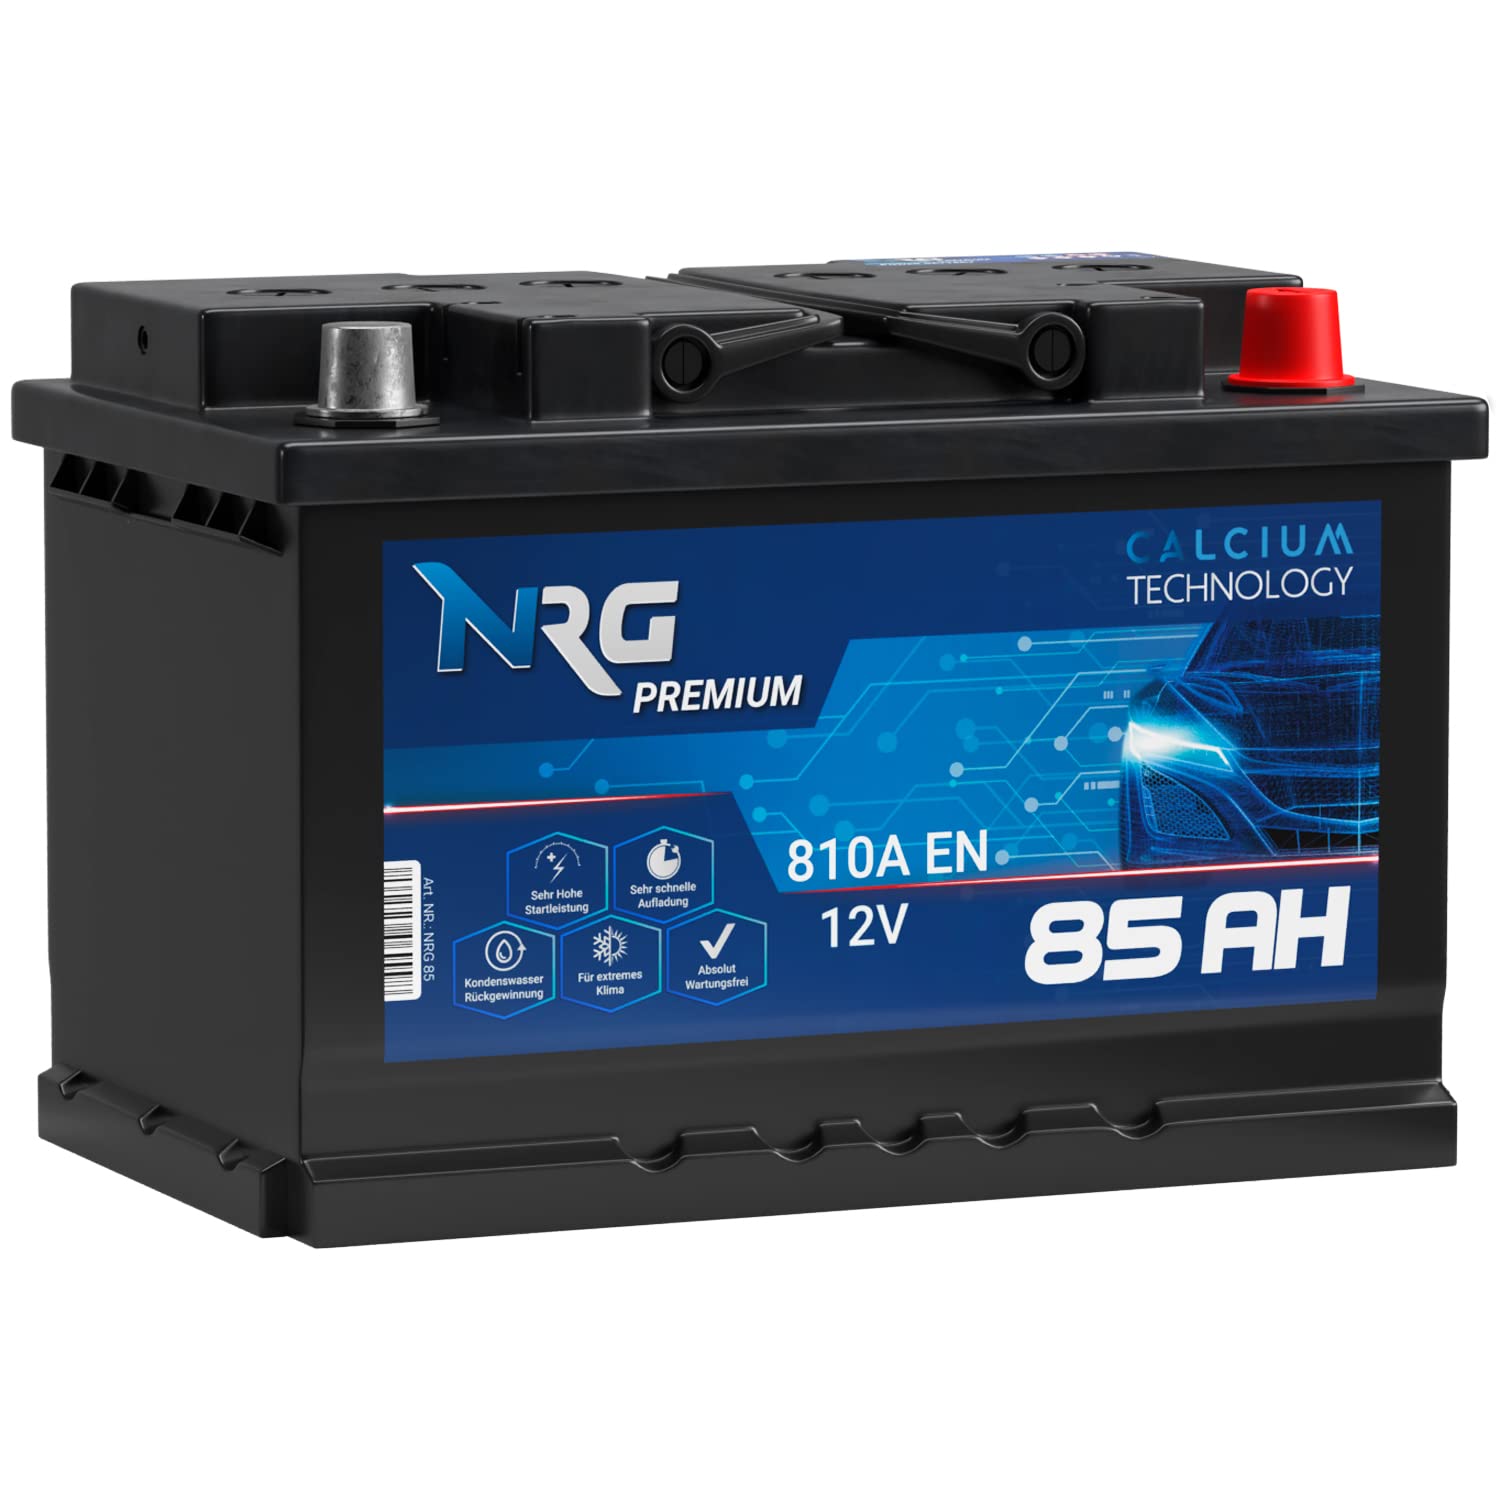 NRG Premium Autobatterie 12V 85Ah 810A/EN Batterie ersetzt 74AH 75AH 77AH 80AH 82AH 83AH von NRG PREMIUM